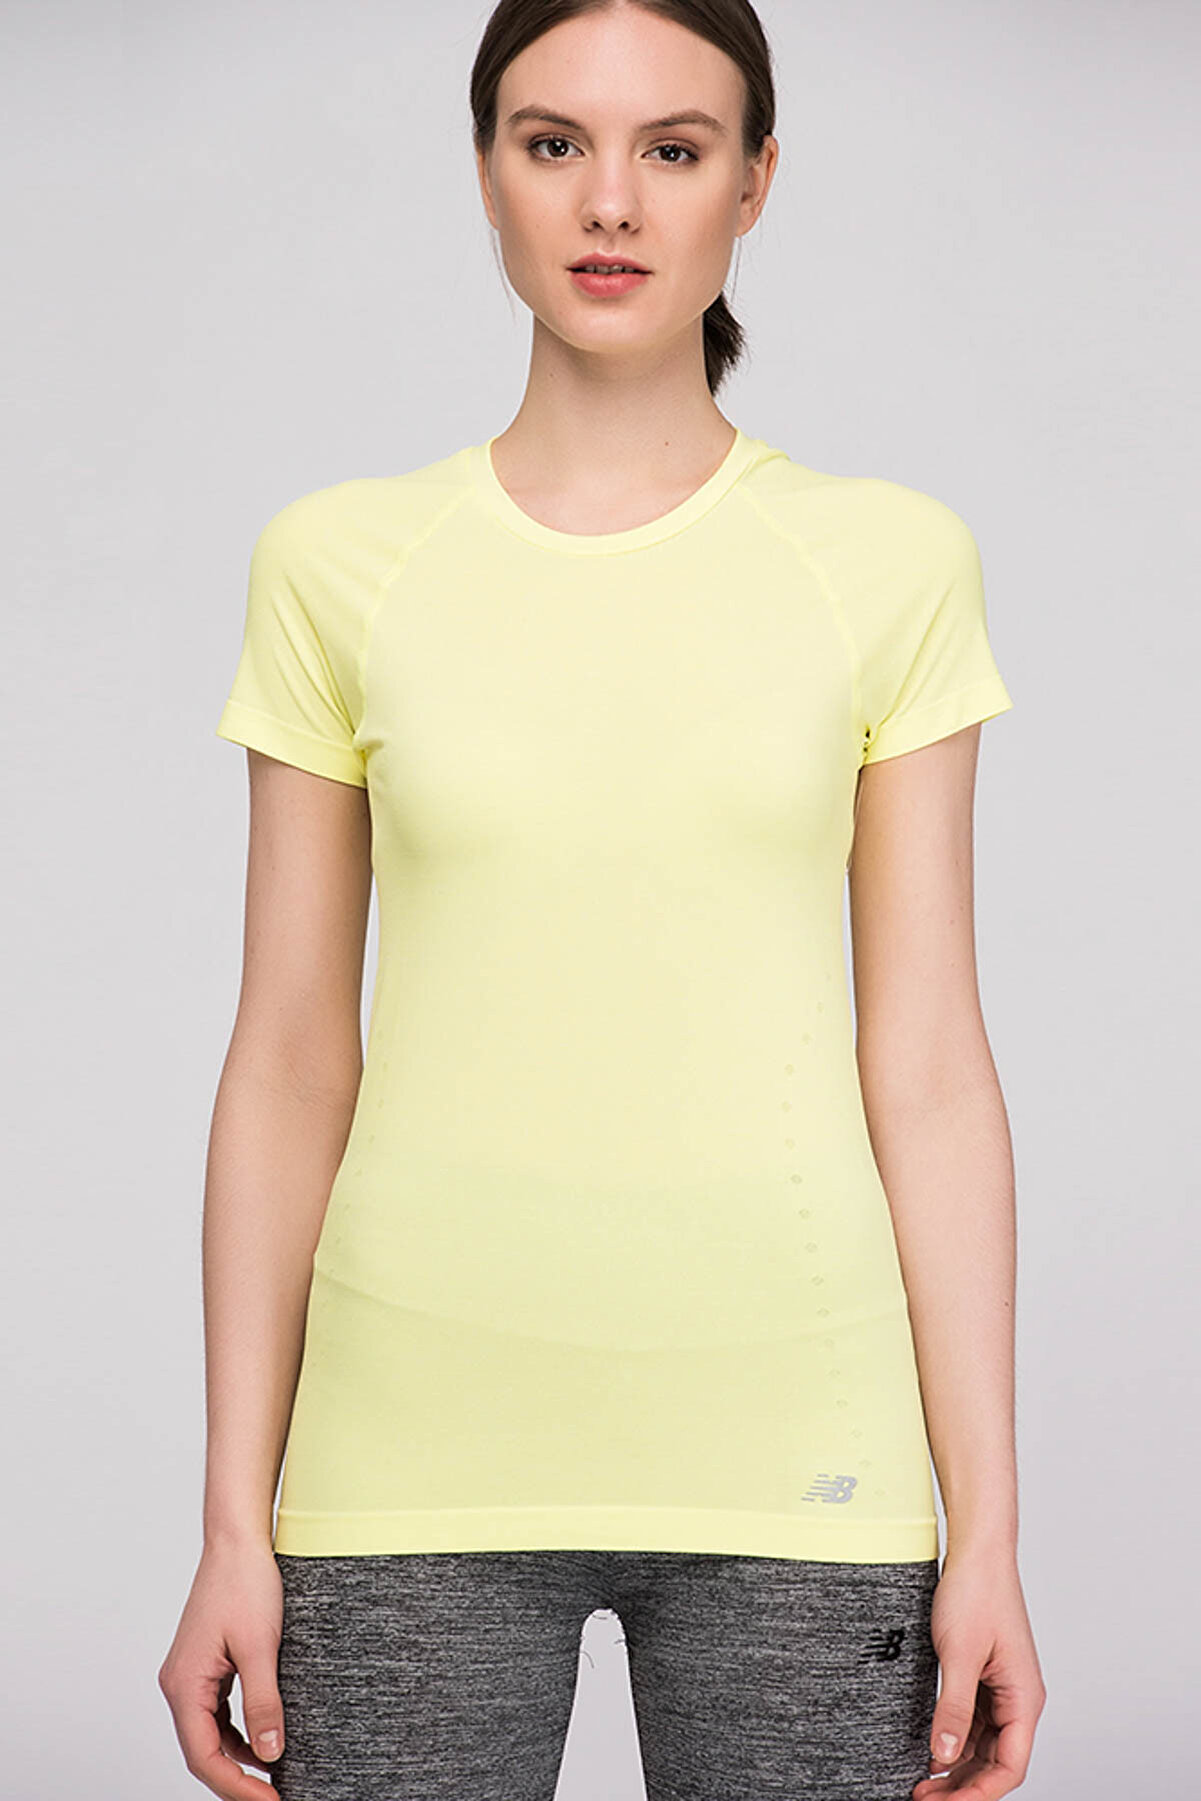 New Balance Kadın T-shirt - WT81820-SRY